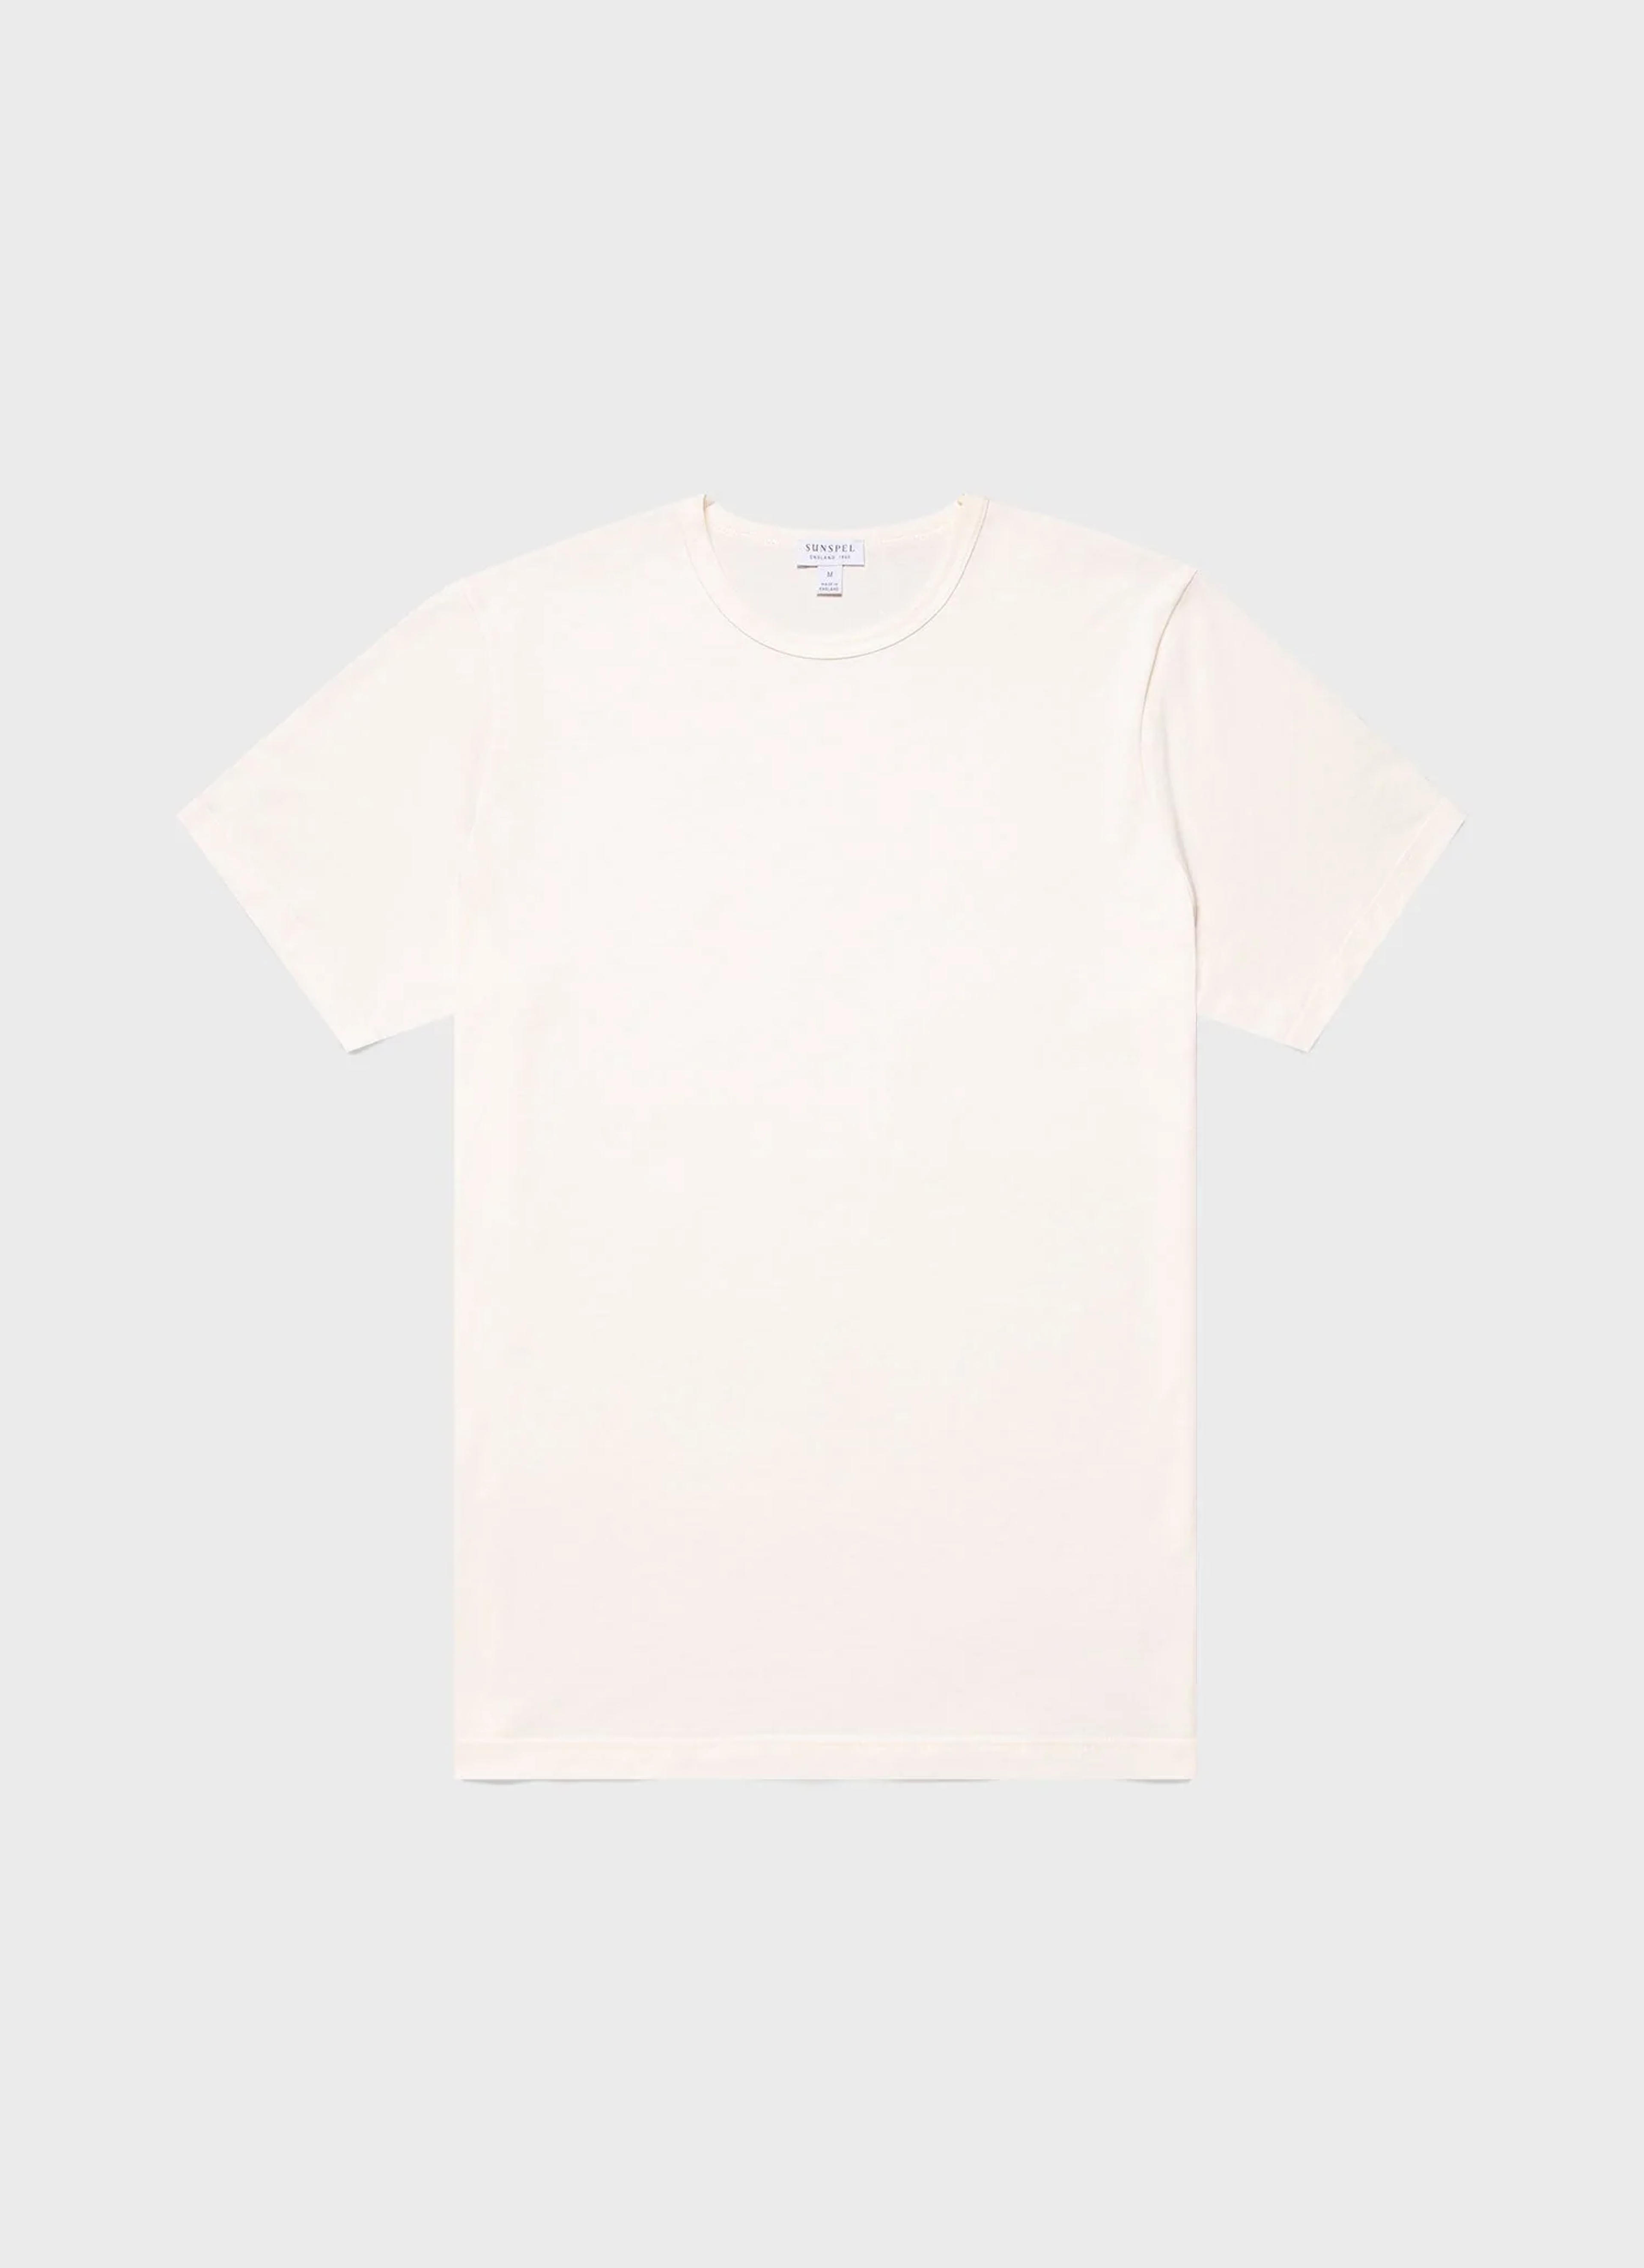 Men's Classic Cotton T-Shirt in Archive White | Sunspel